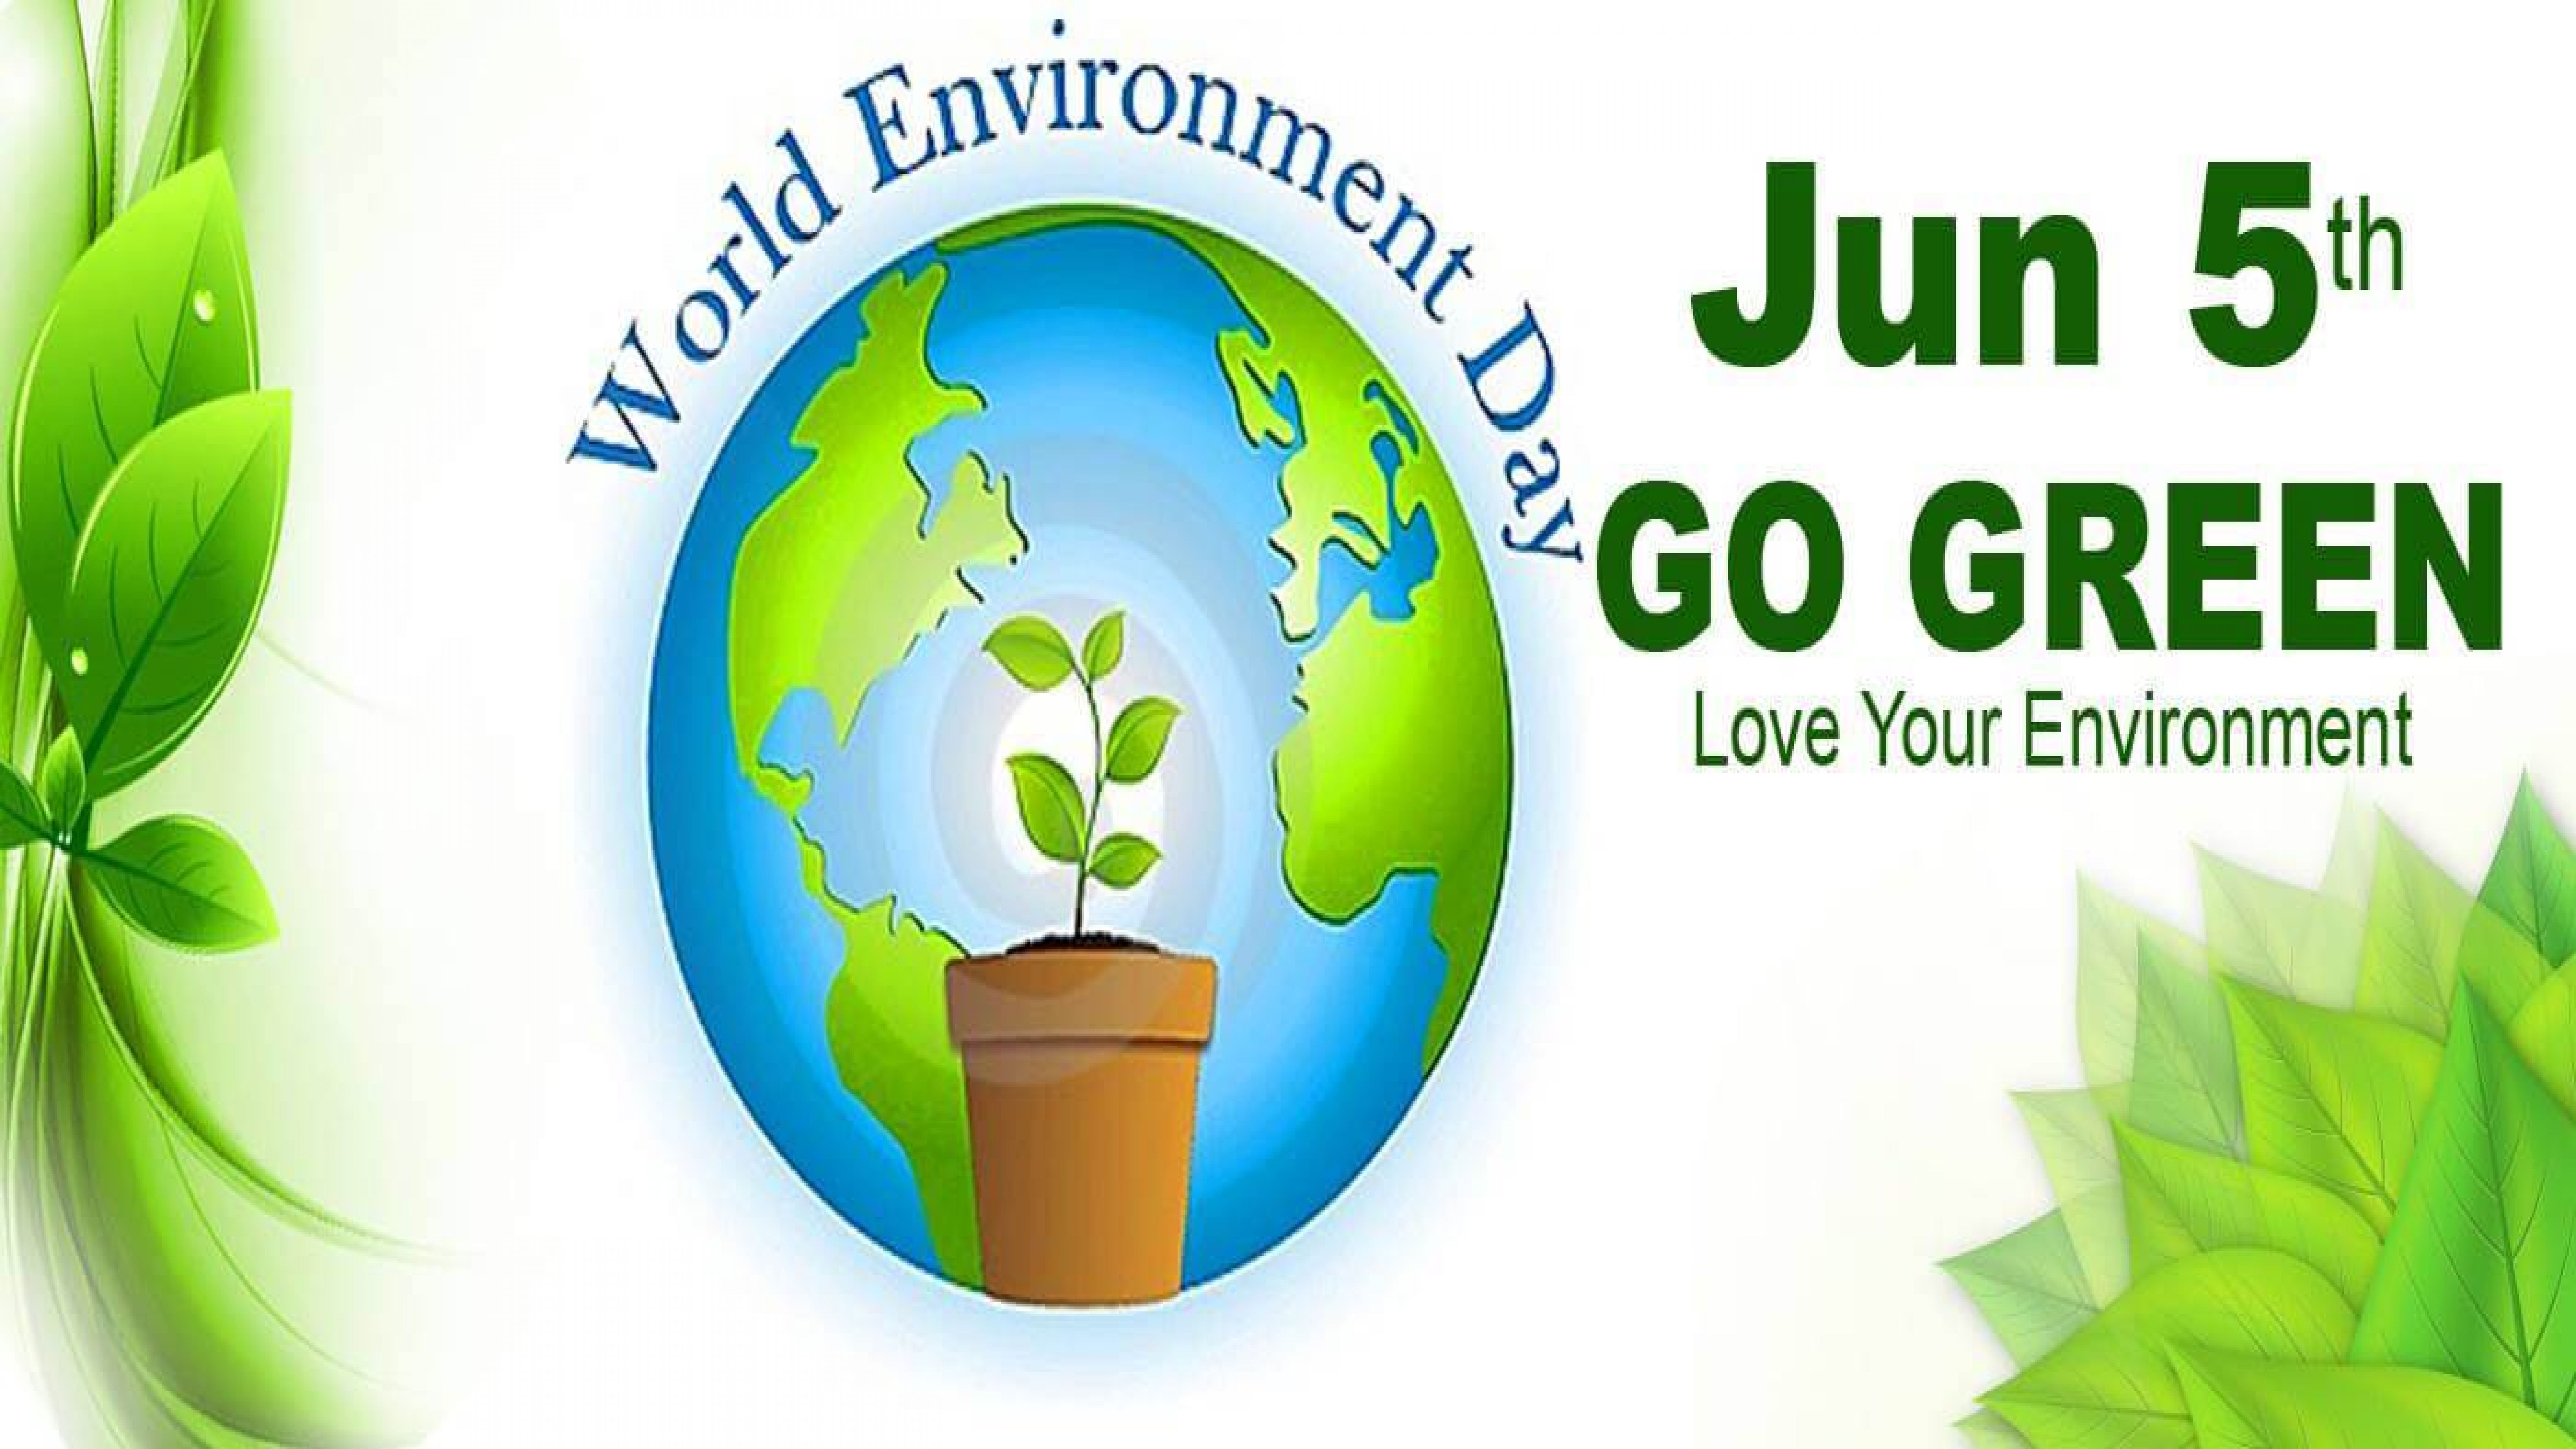 World Environment Day HD Wallpaper